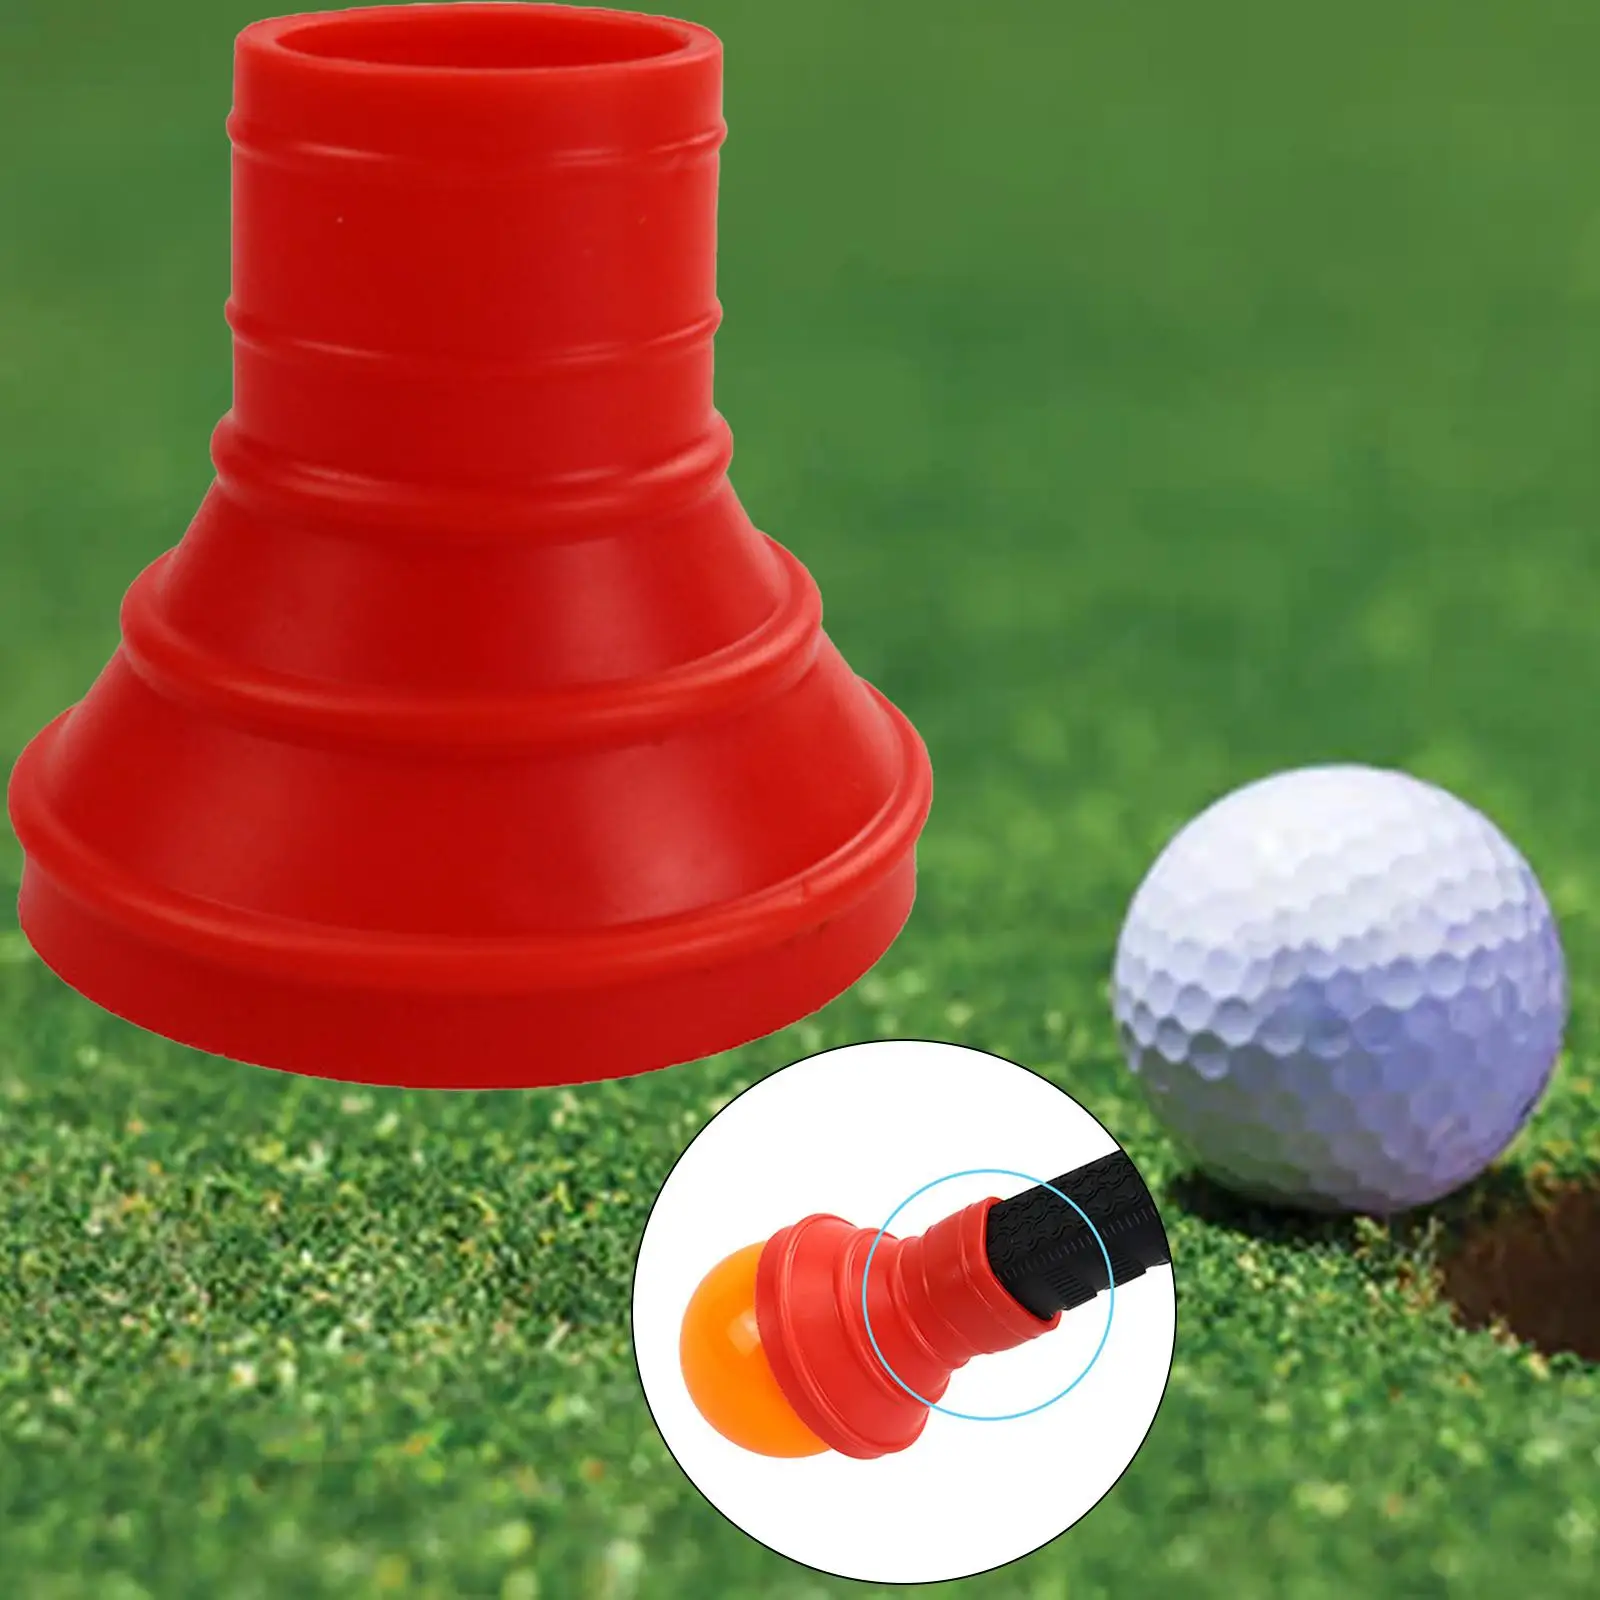 Retriever Professional Picker Golf Ball Pick up  Tool for Golfer